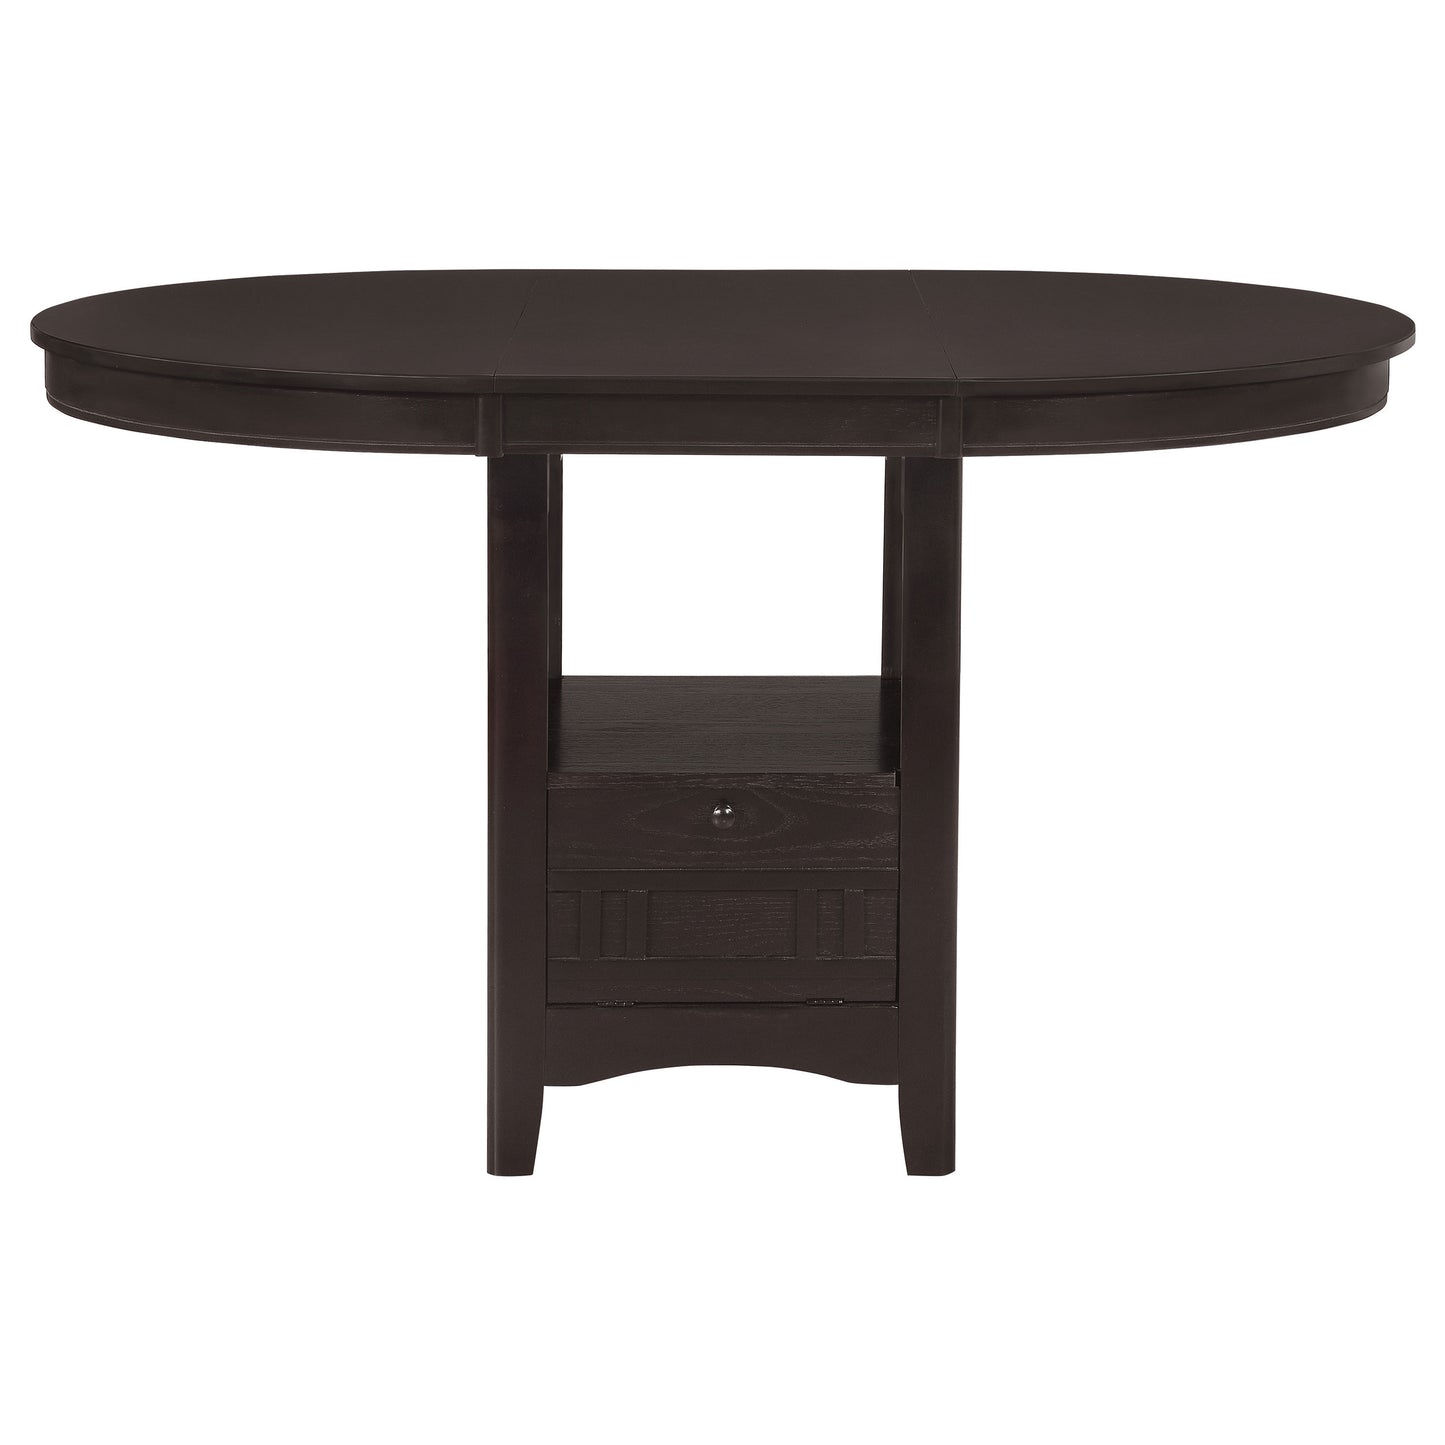 Lavon Oval Counter Height Table Espresso